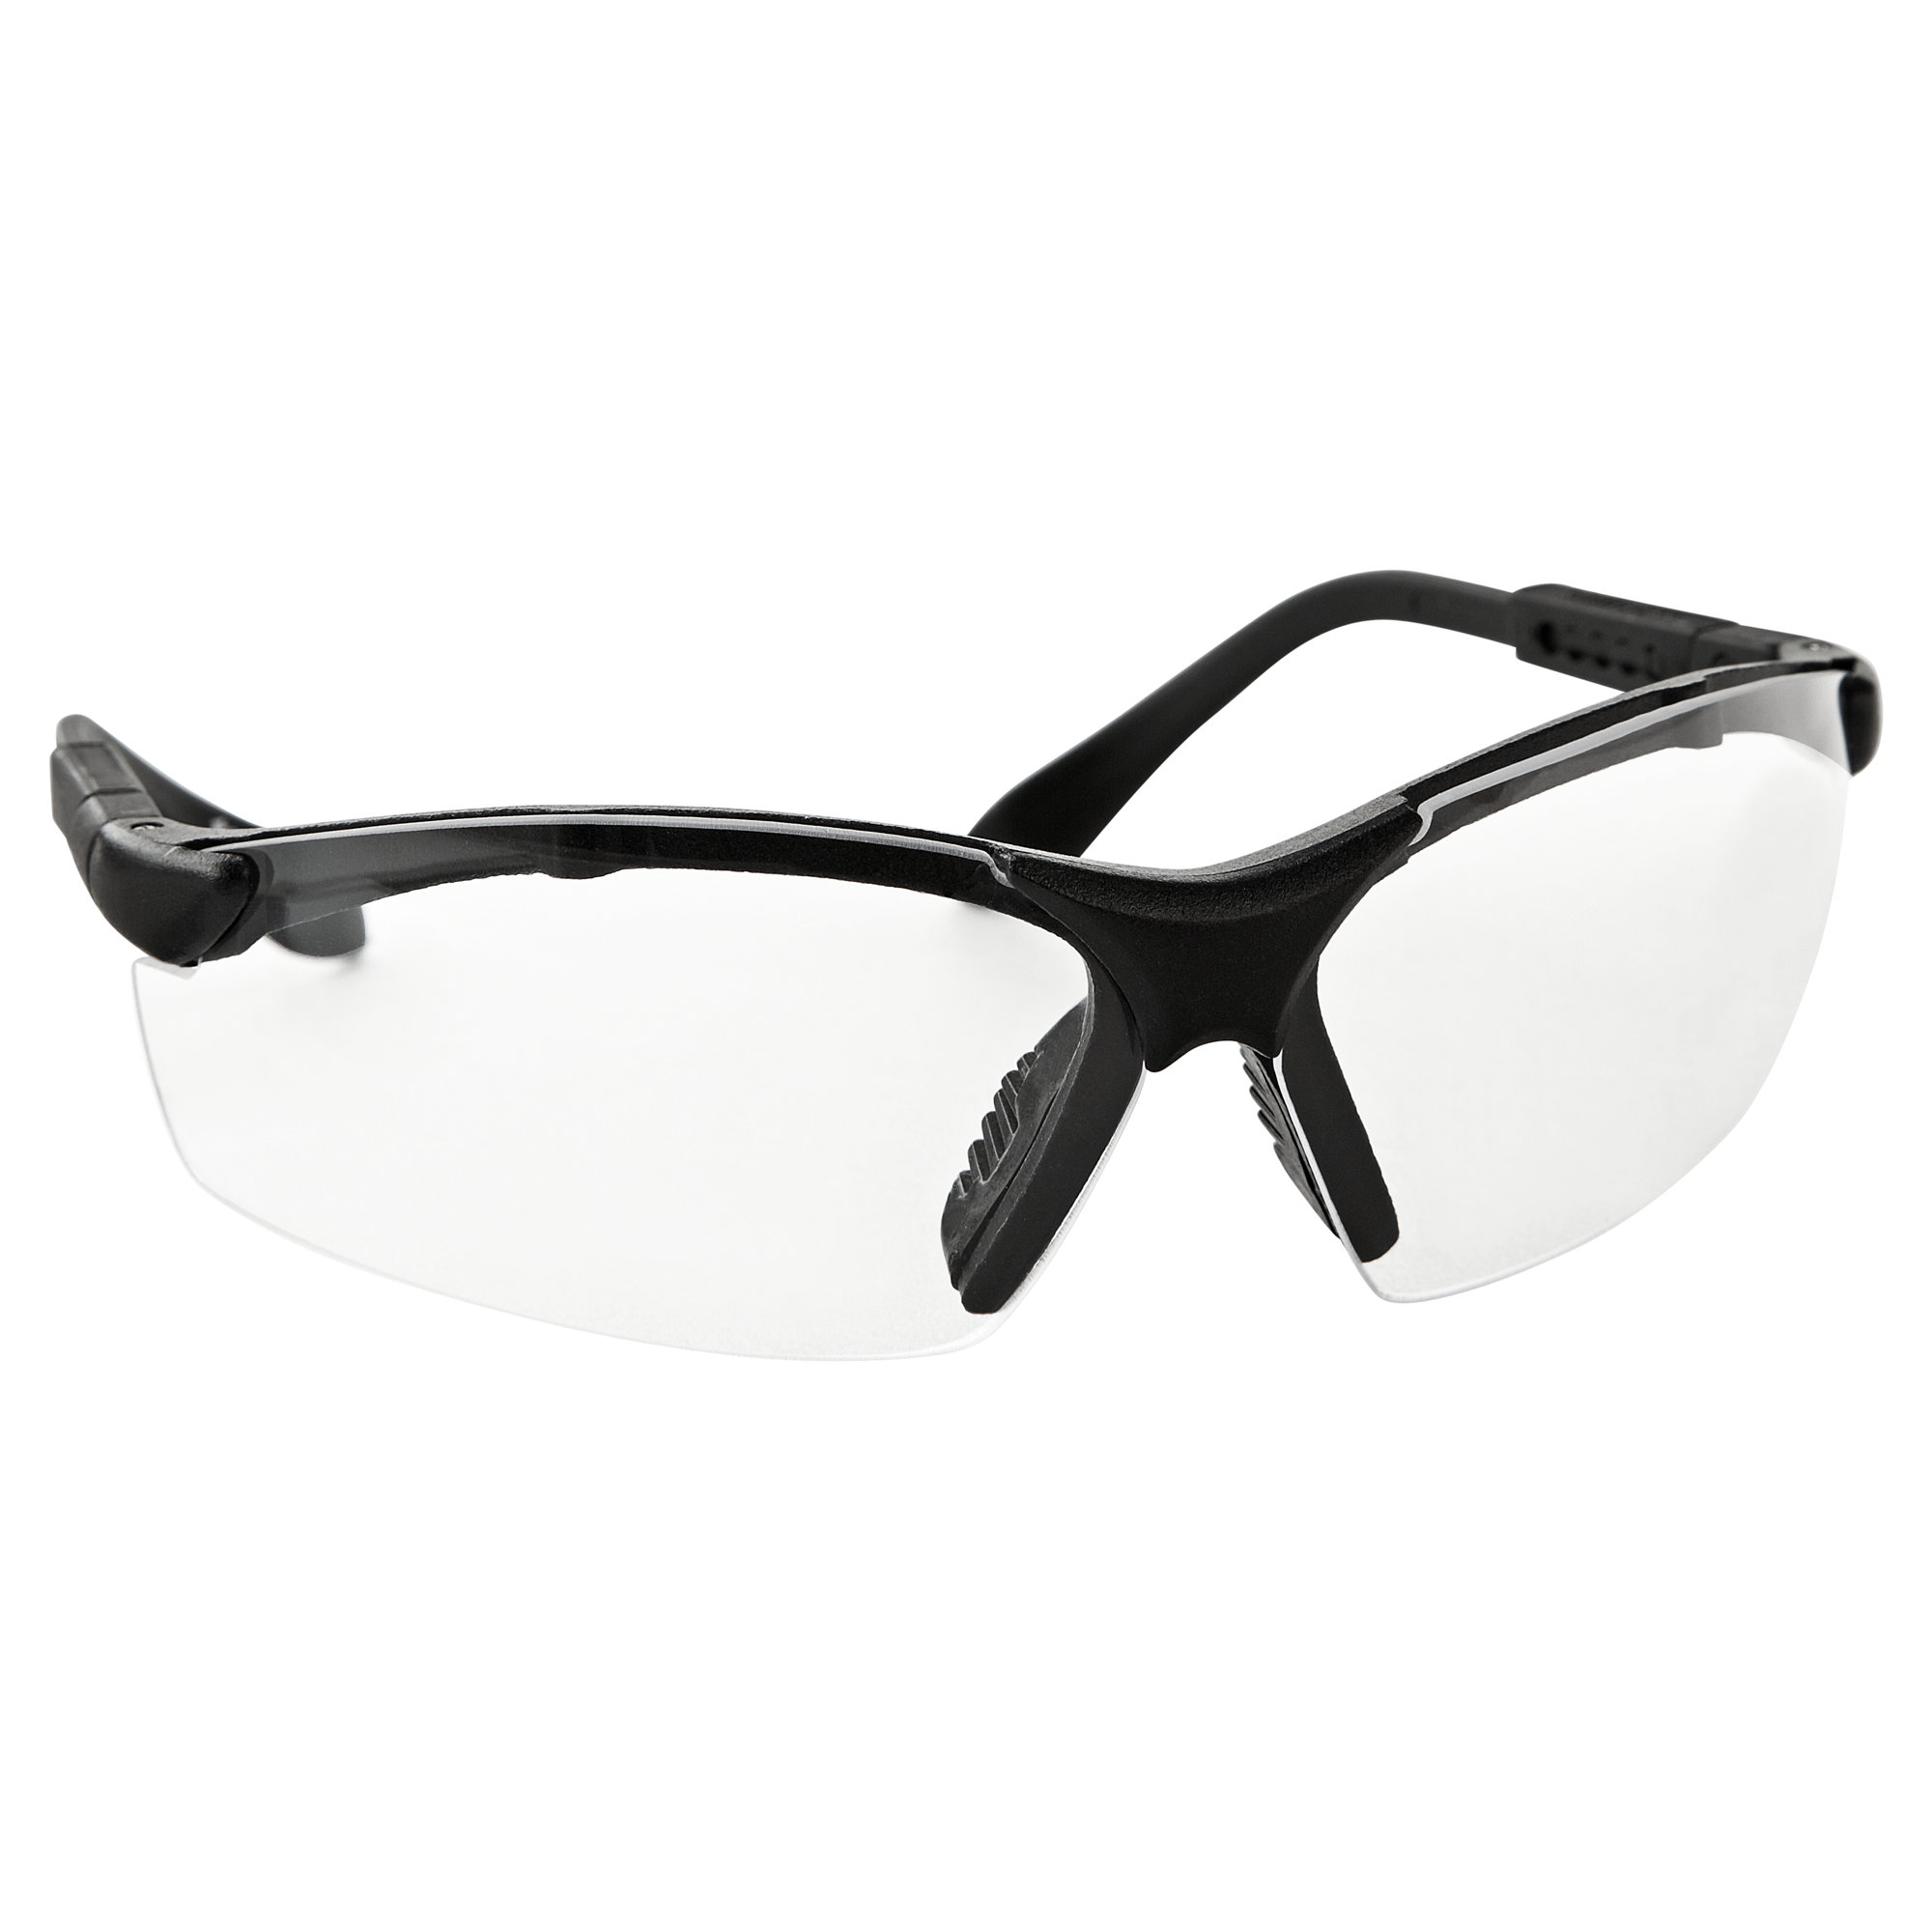 Gestellbrille schwarz/transparent + product picture